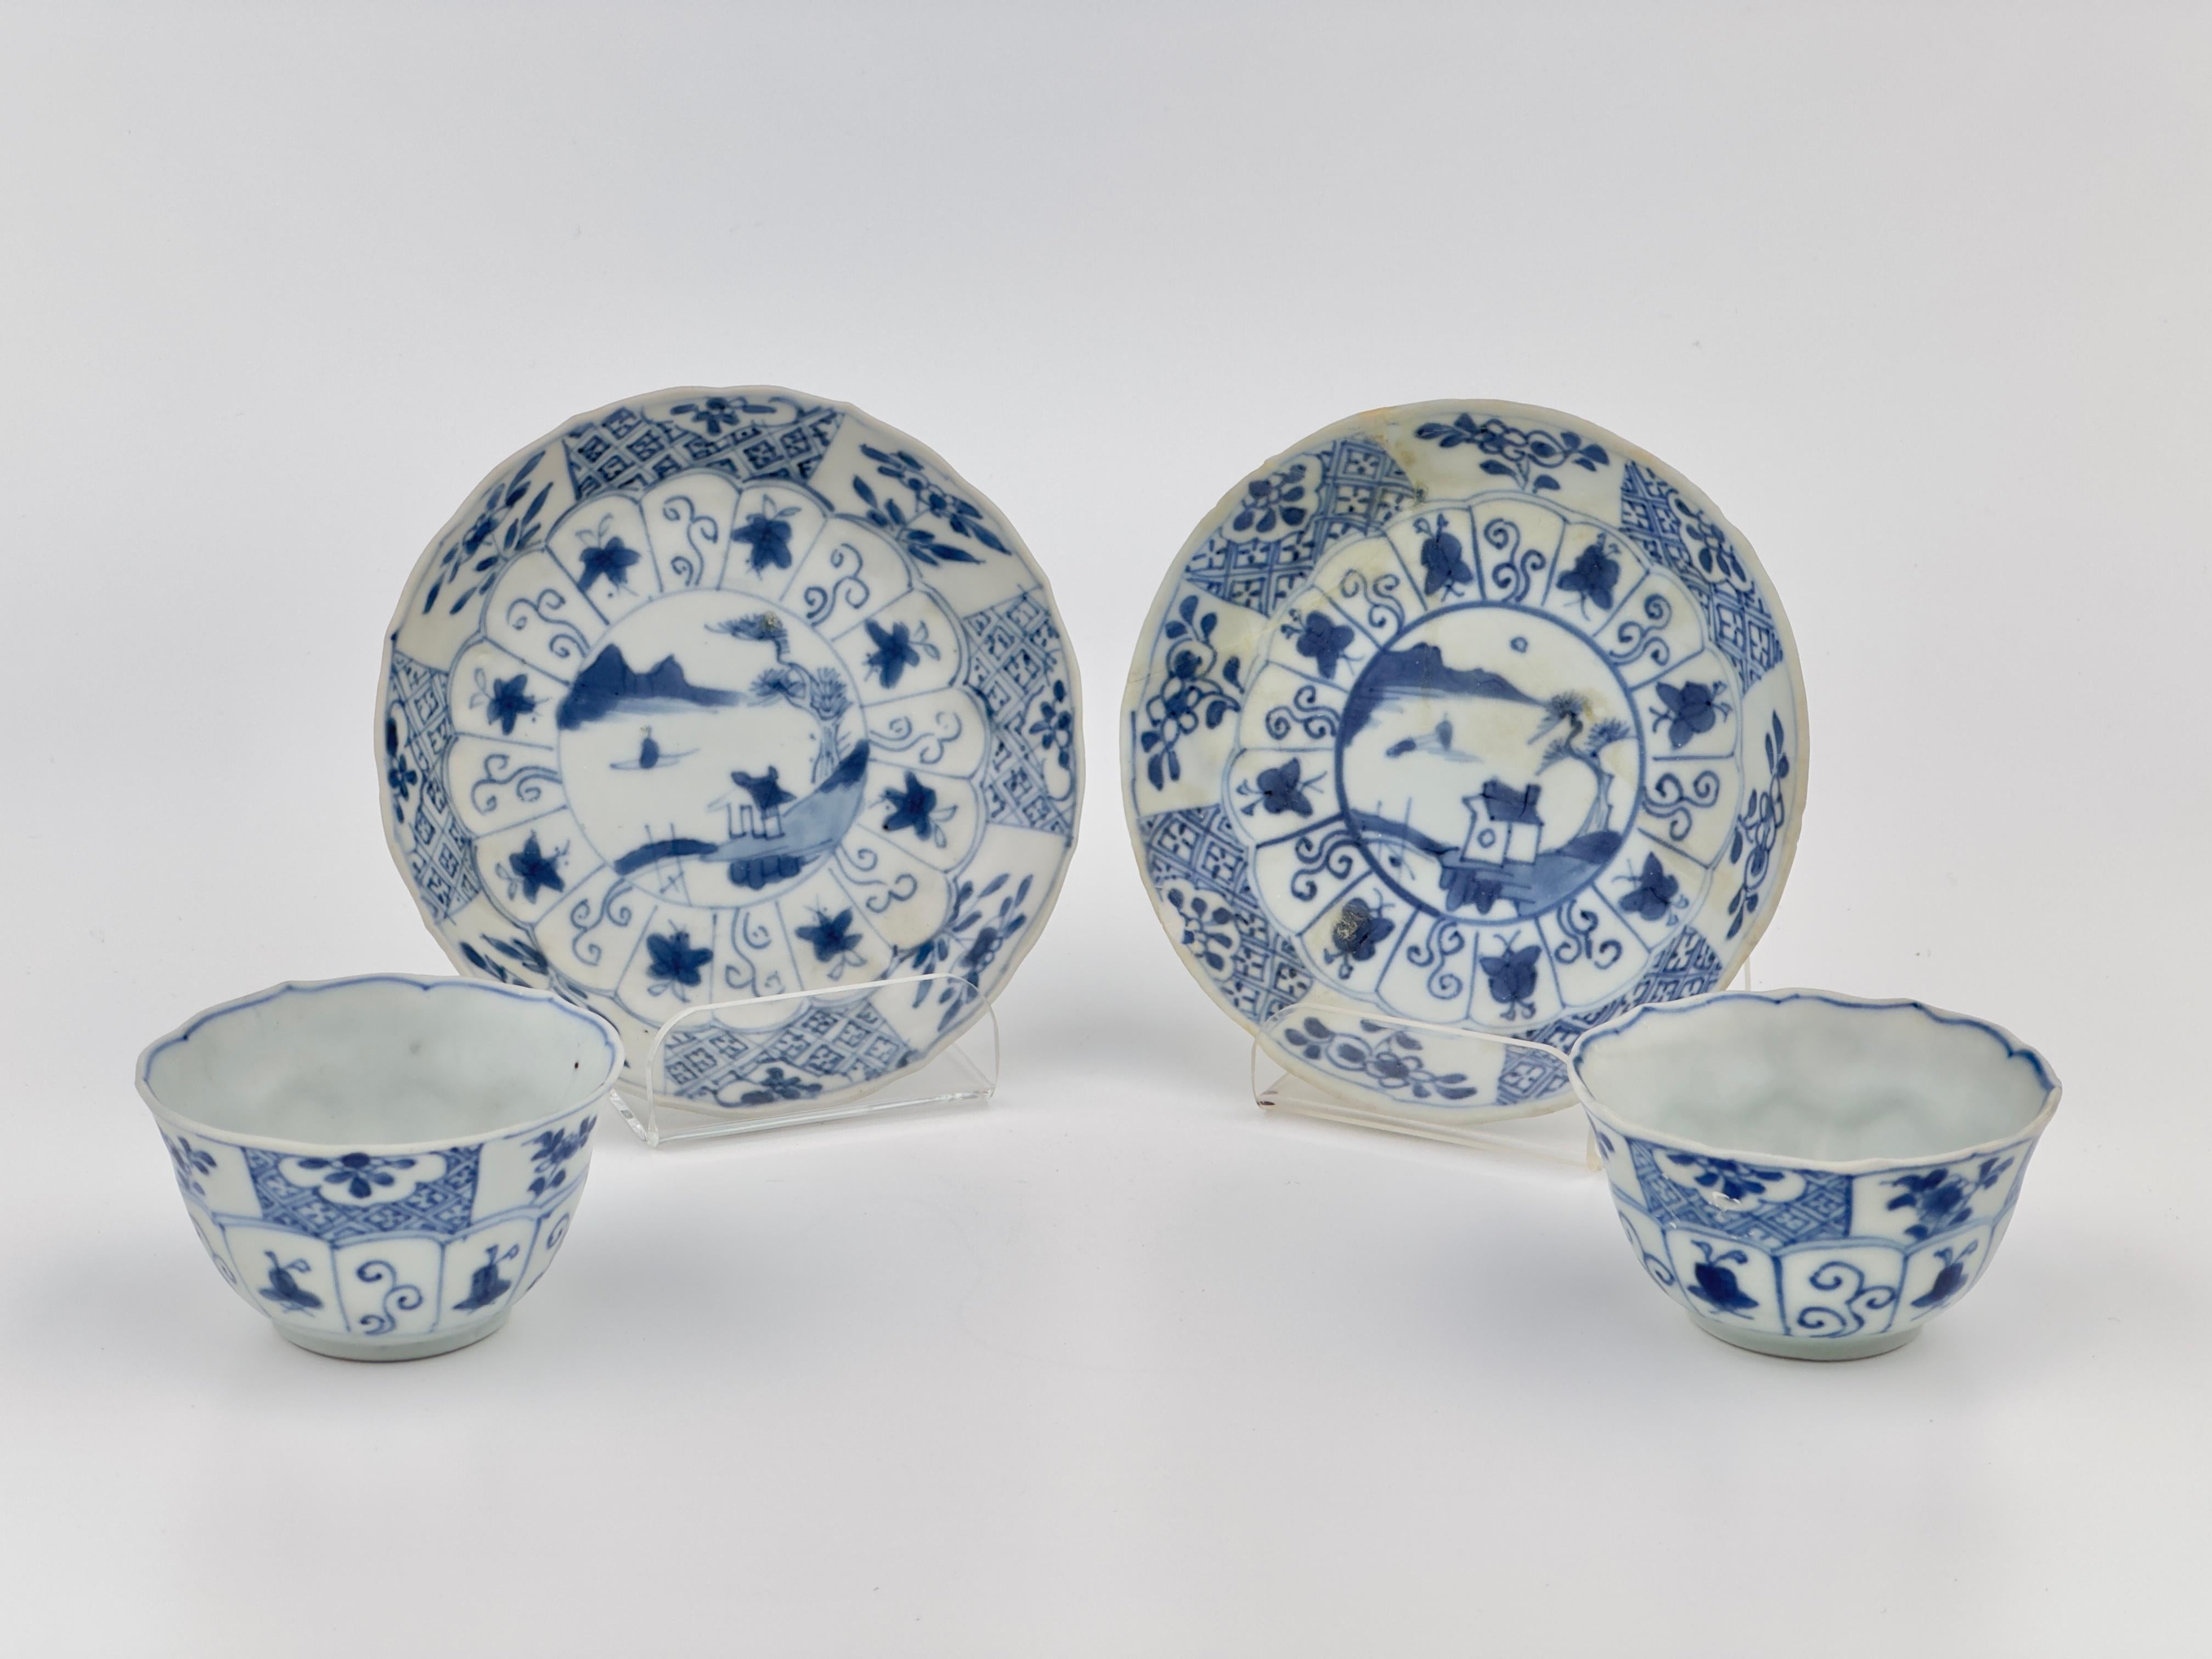 Blau-weißes Teeservice um 1725, Qing Dynastie, Herrschaft Yongzheng (Qing-Dynastie) im Angebot